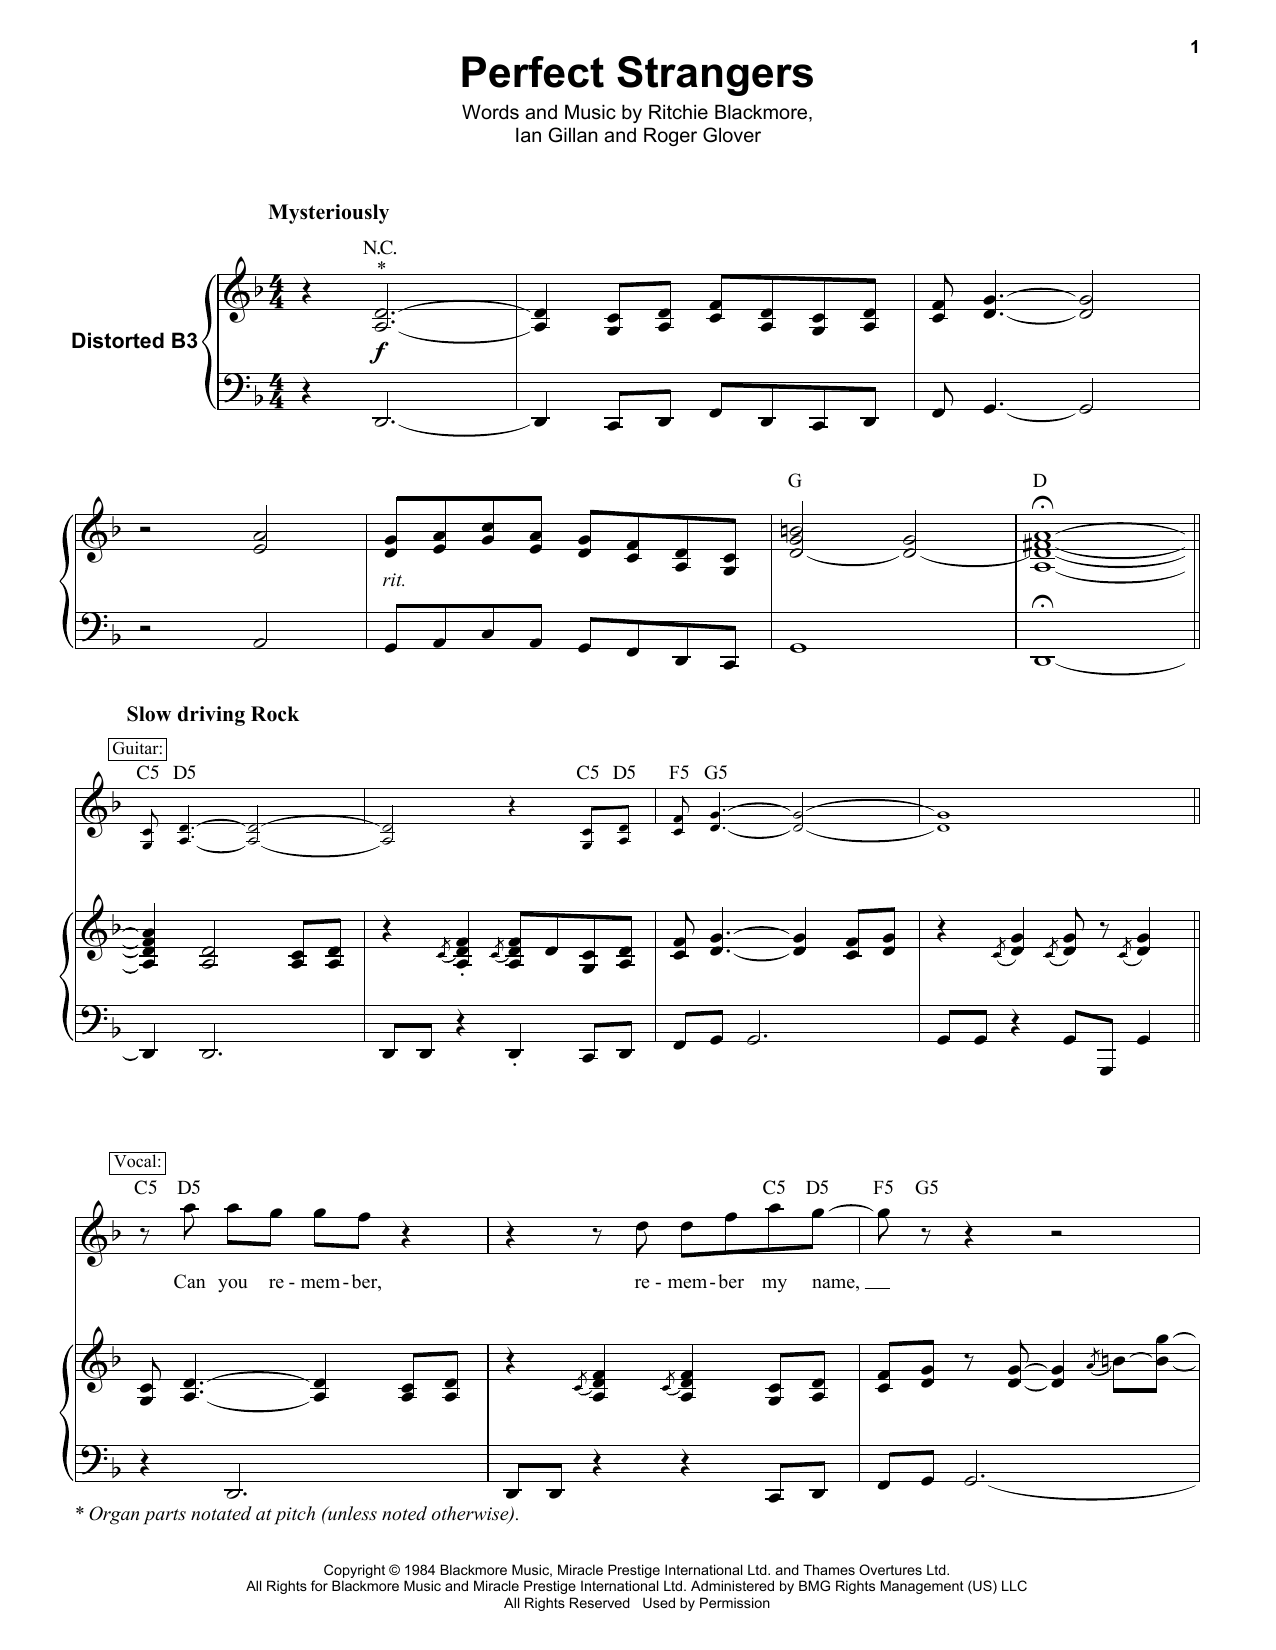 Deep Purple Perfect Strangers Sheet Music Notes & Chords for Guitar Tab (Single Guitar) - Download or Print PDF